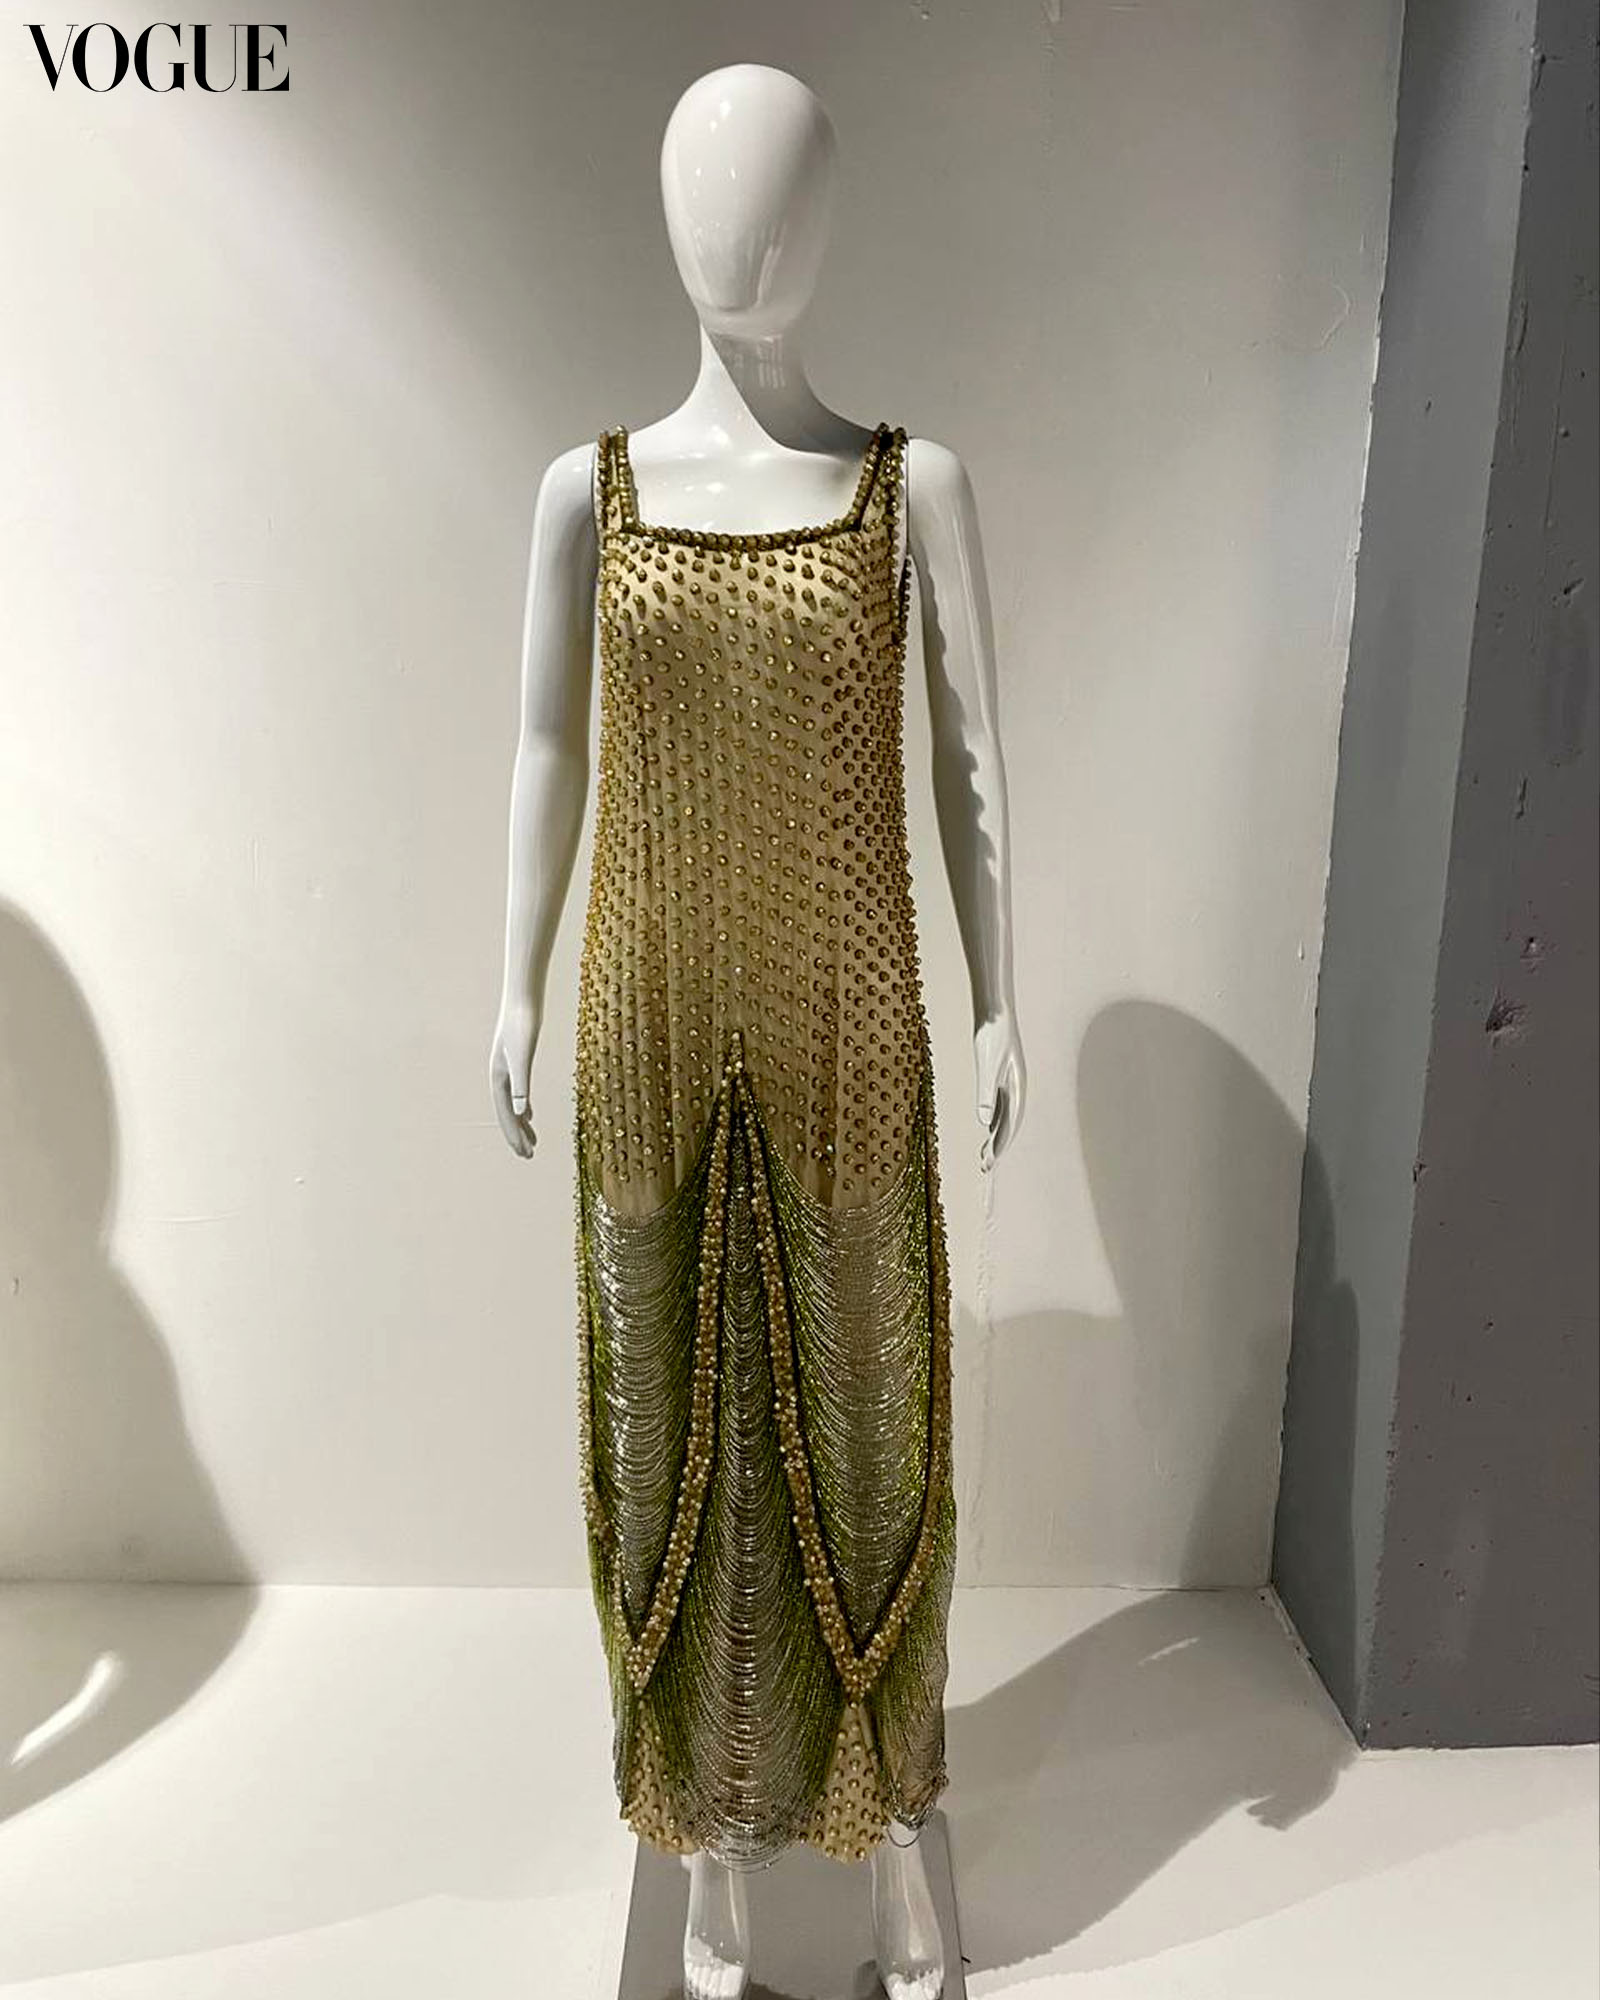 An Audrey Hepburn-inspired dress by Ramon Valera